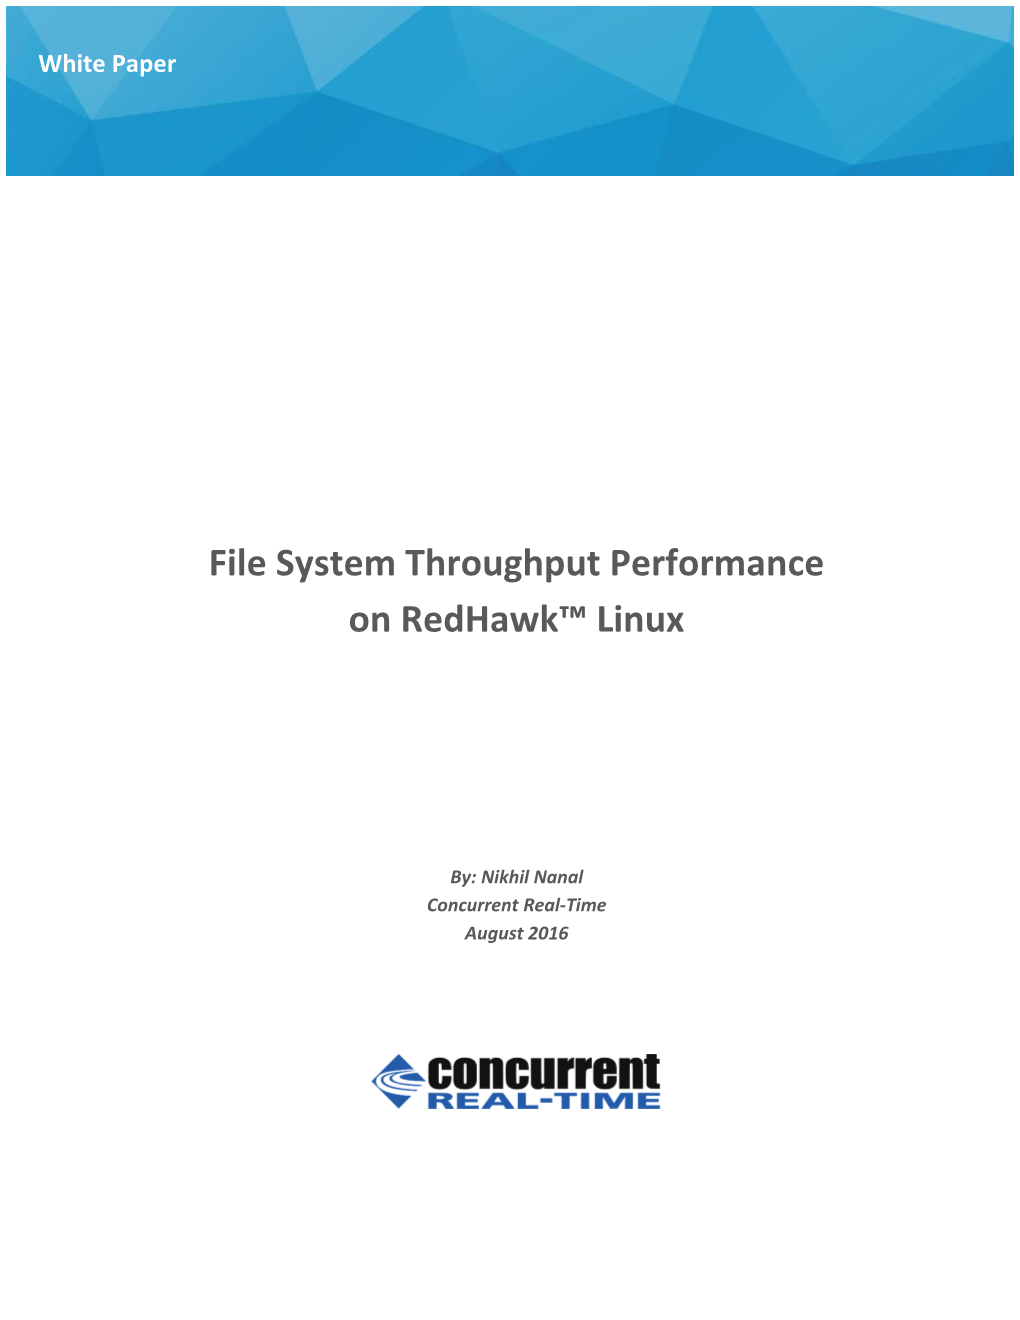 File System Throughput Performance on Redhawk™ Linux